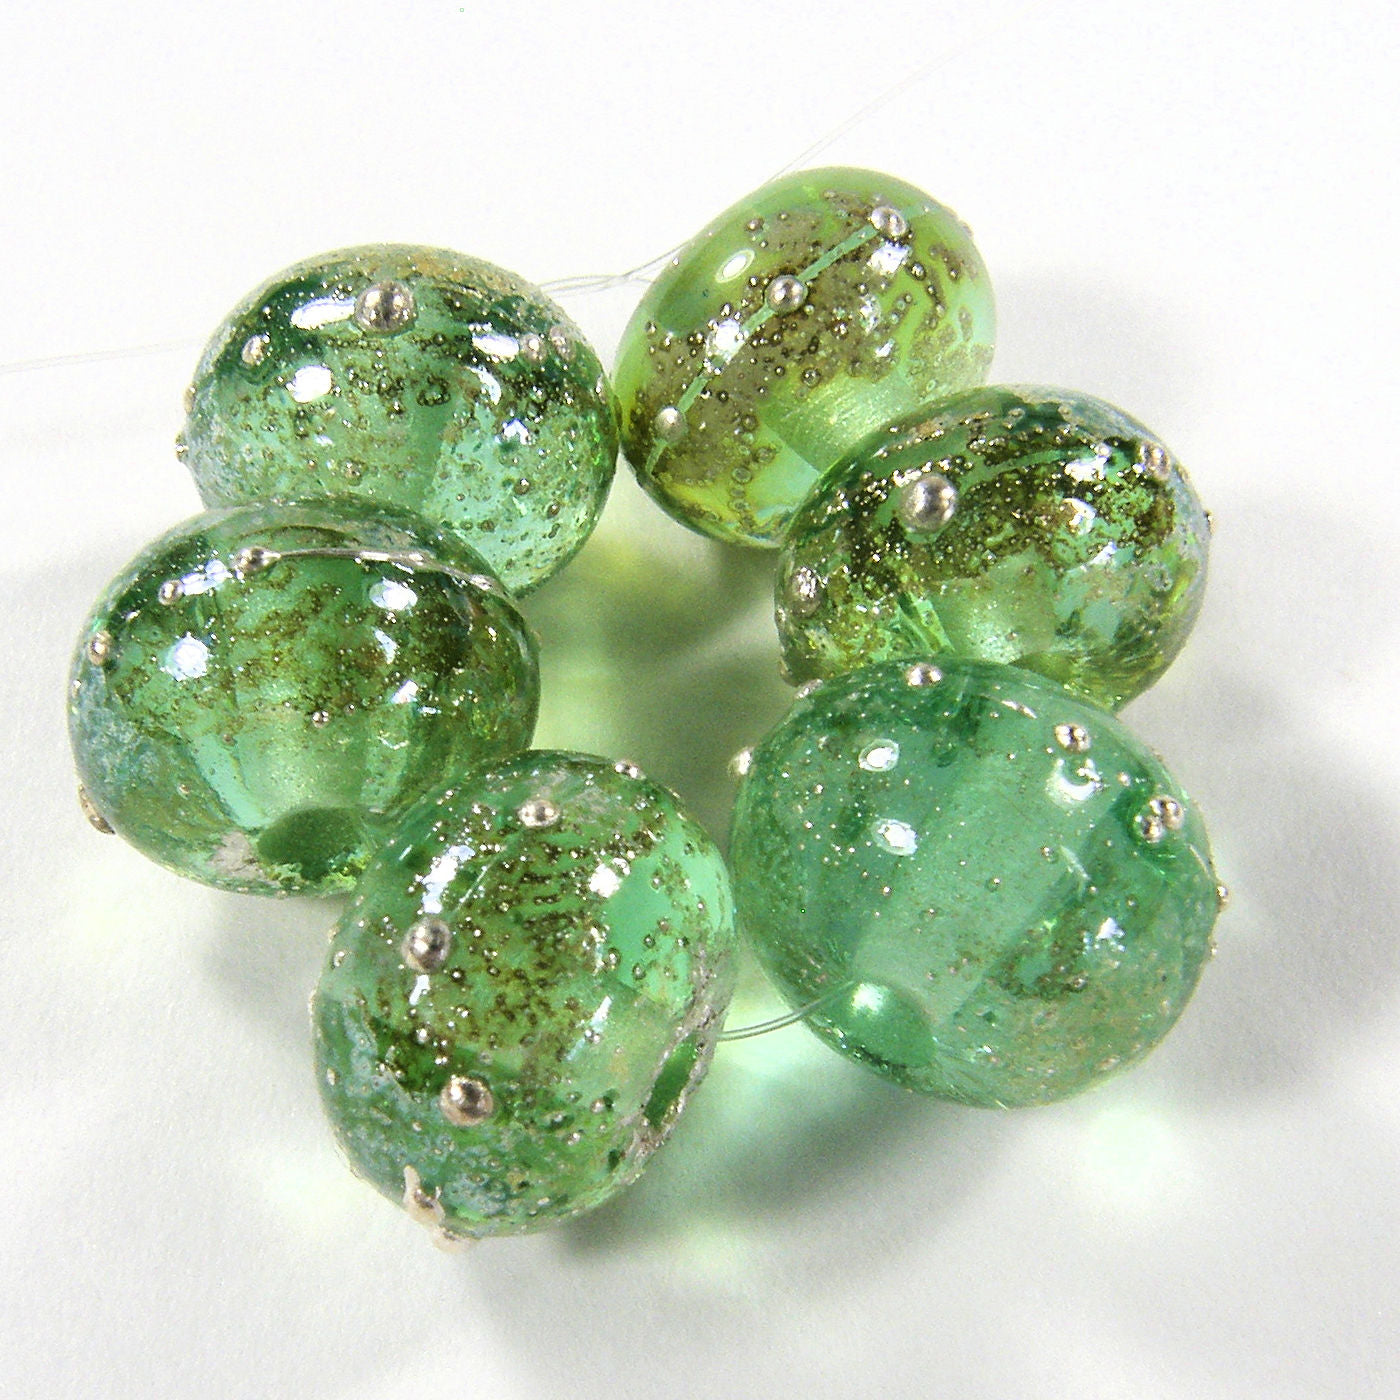 https://covergirlbeads.com/collections/new-handmade-lampwork-beads-and-artisan-handmade-jewelry/products/handmade-lampwork-glass-beads-pale-emerald-green-starlight-silver-shiny